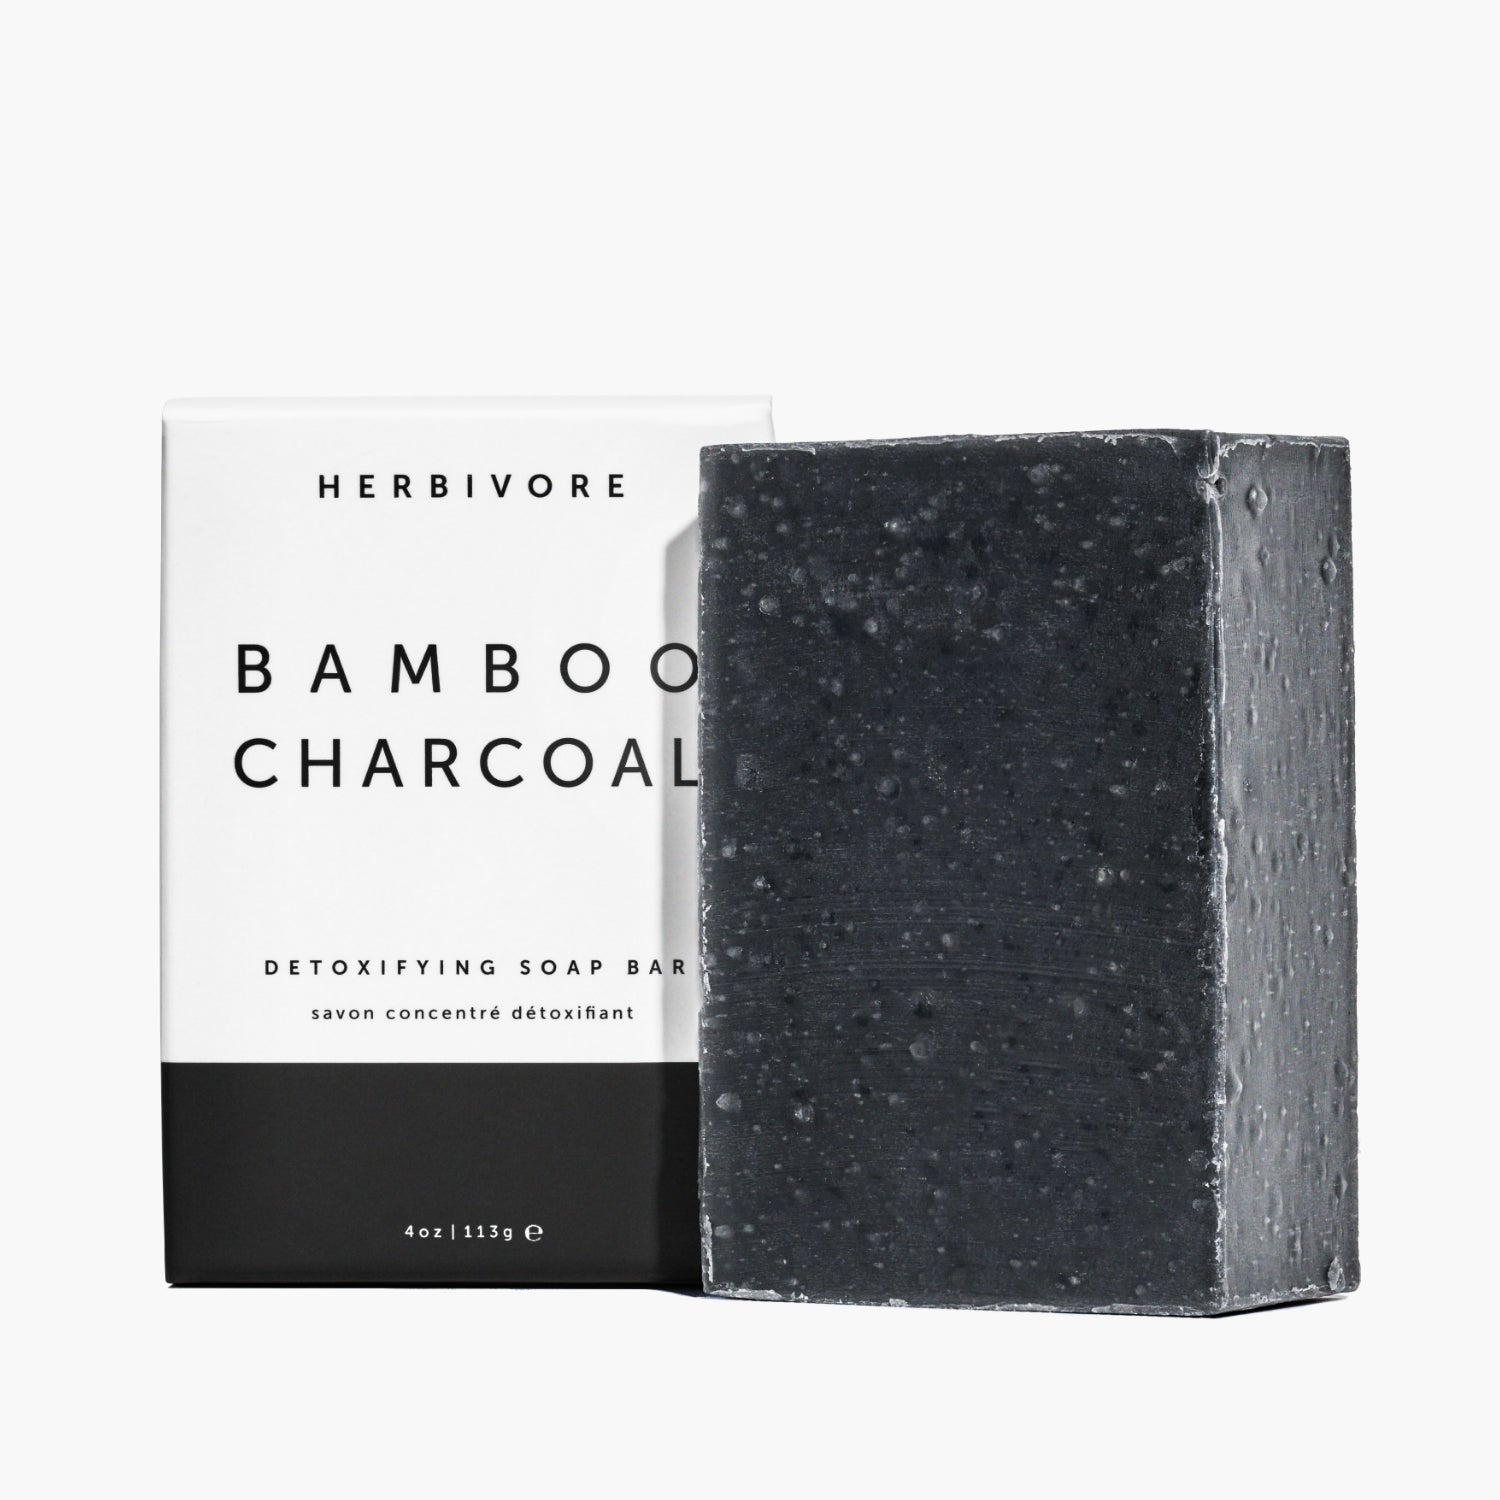 Black Bamboo Charcoal Detoxifying Soap Bar next to outer box